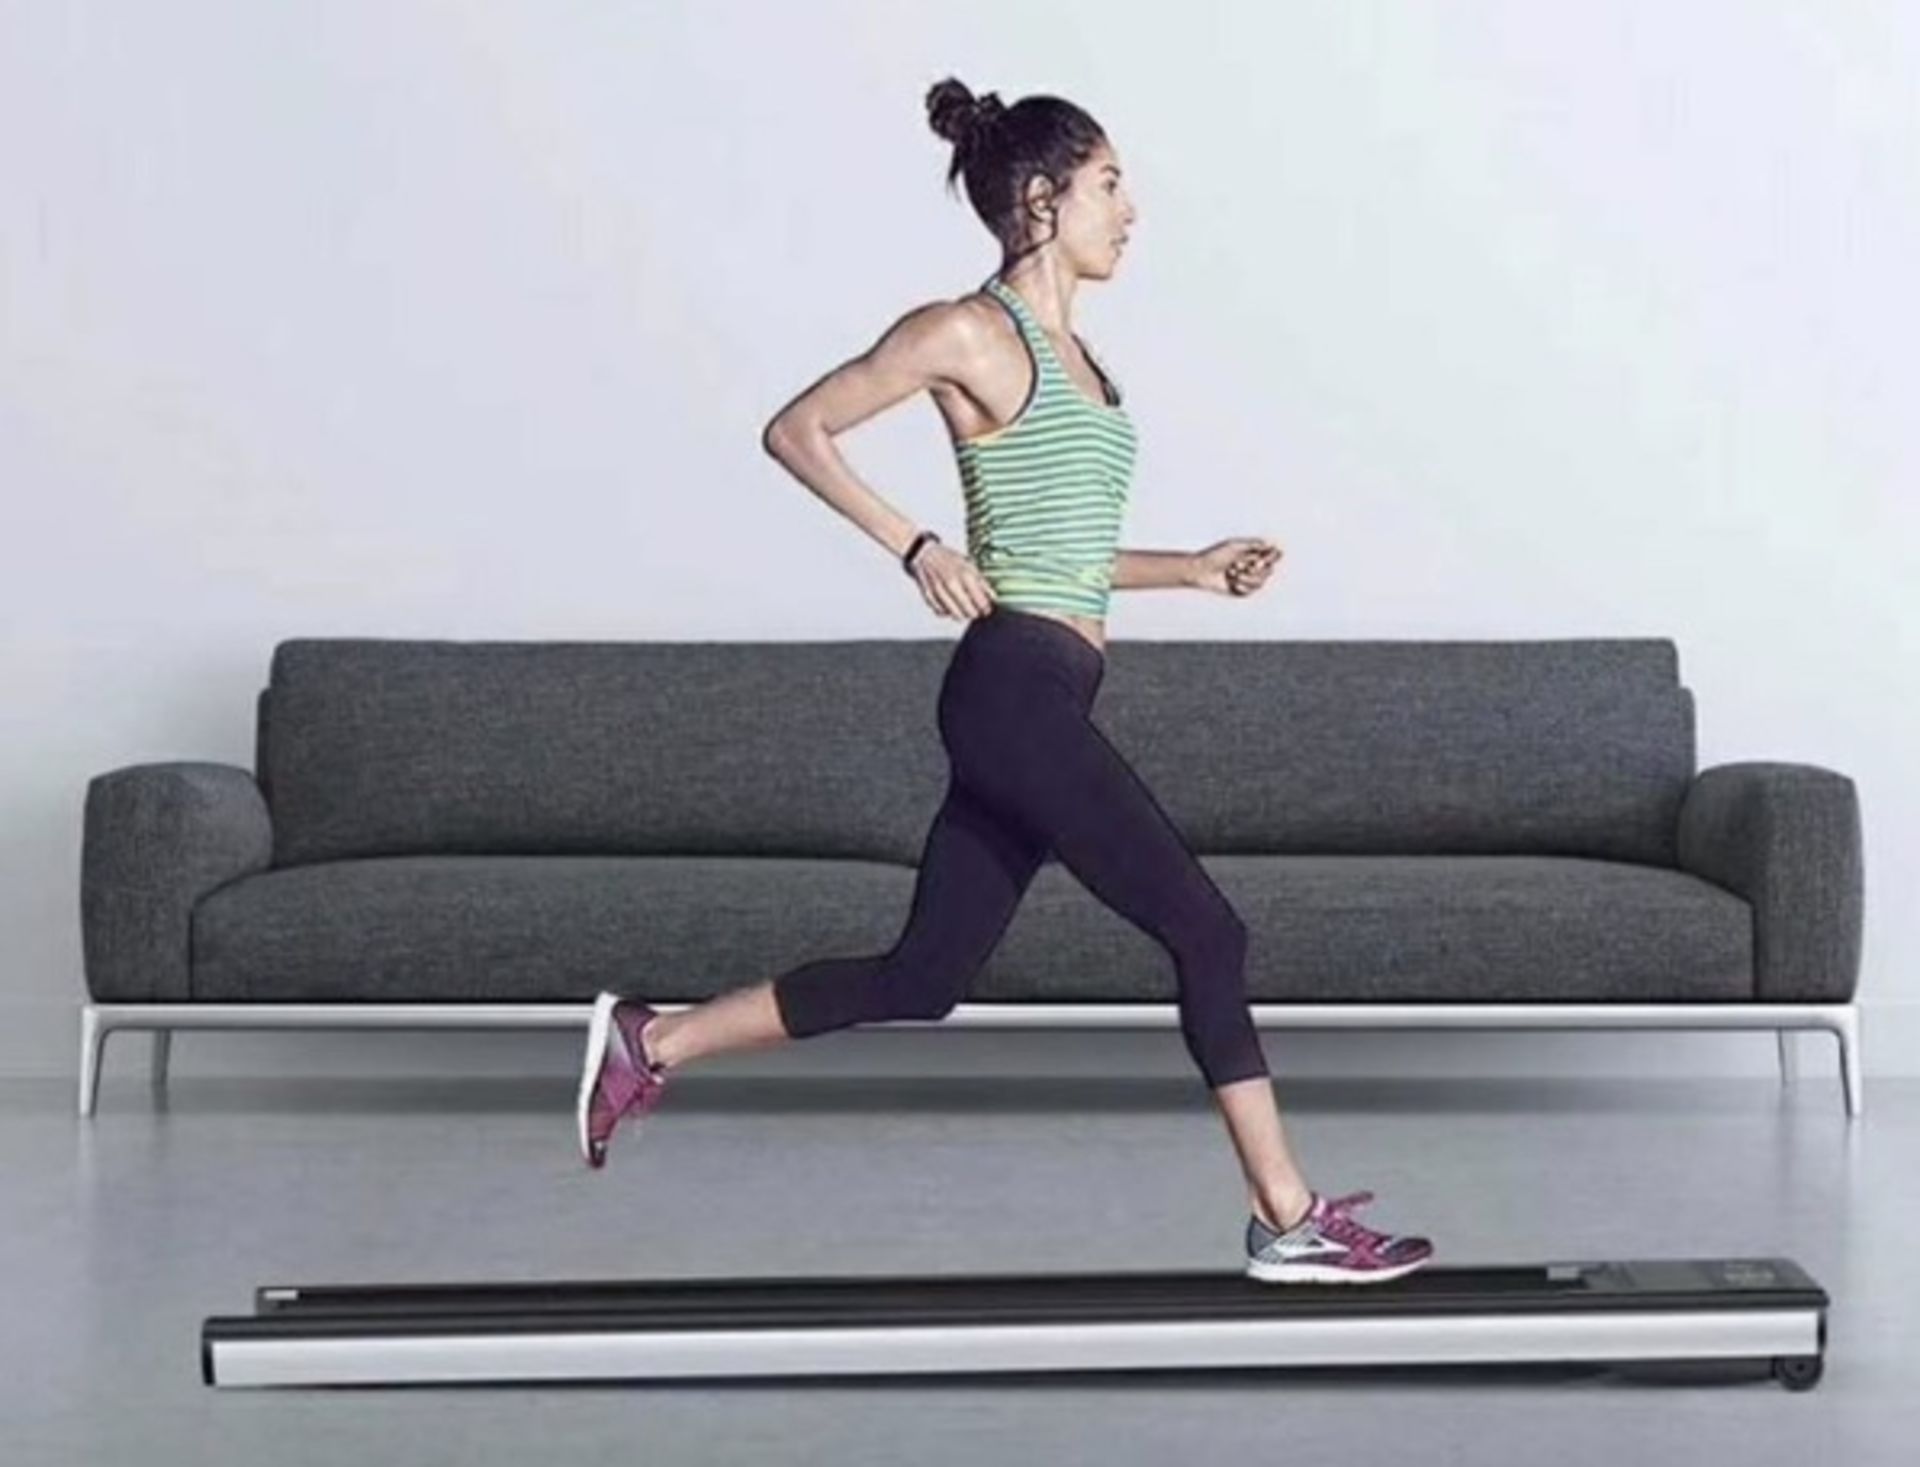 10 x Slim Tread Ultra Thin Smart Treadmill Running / Walking Machines - Lightweight With Folding - Image 7 of 11